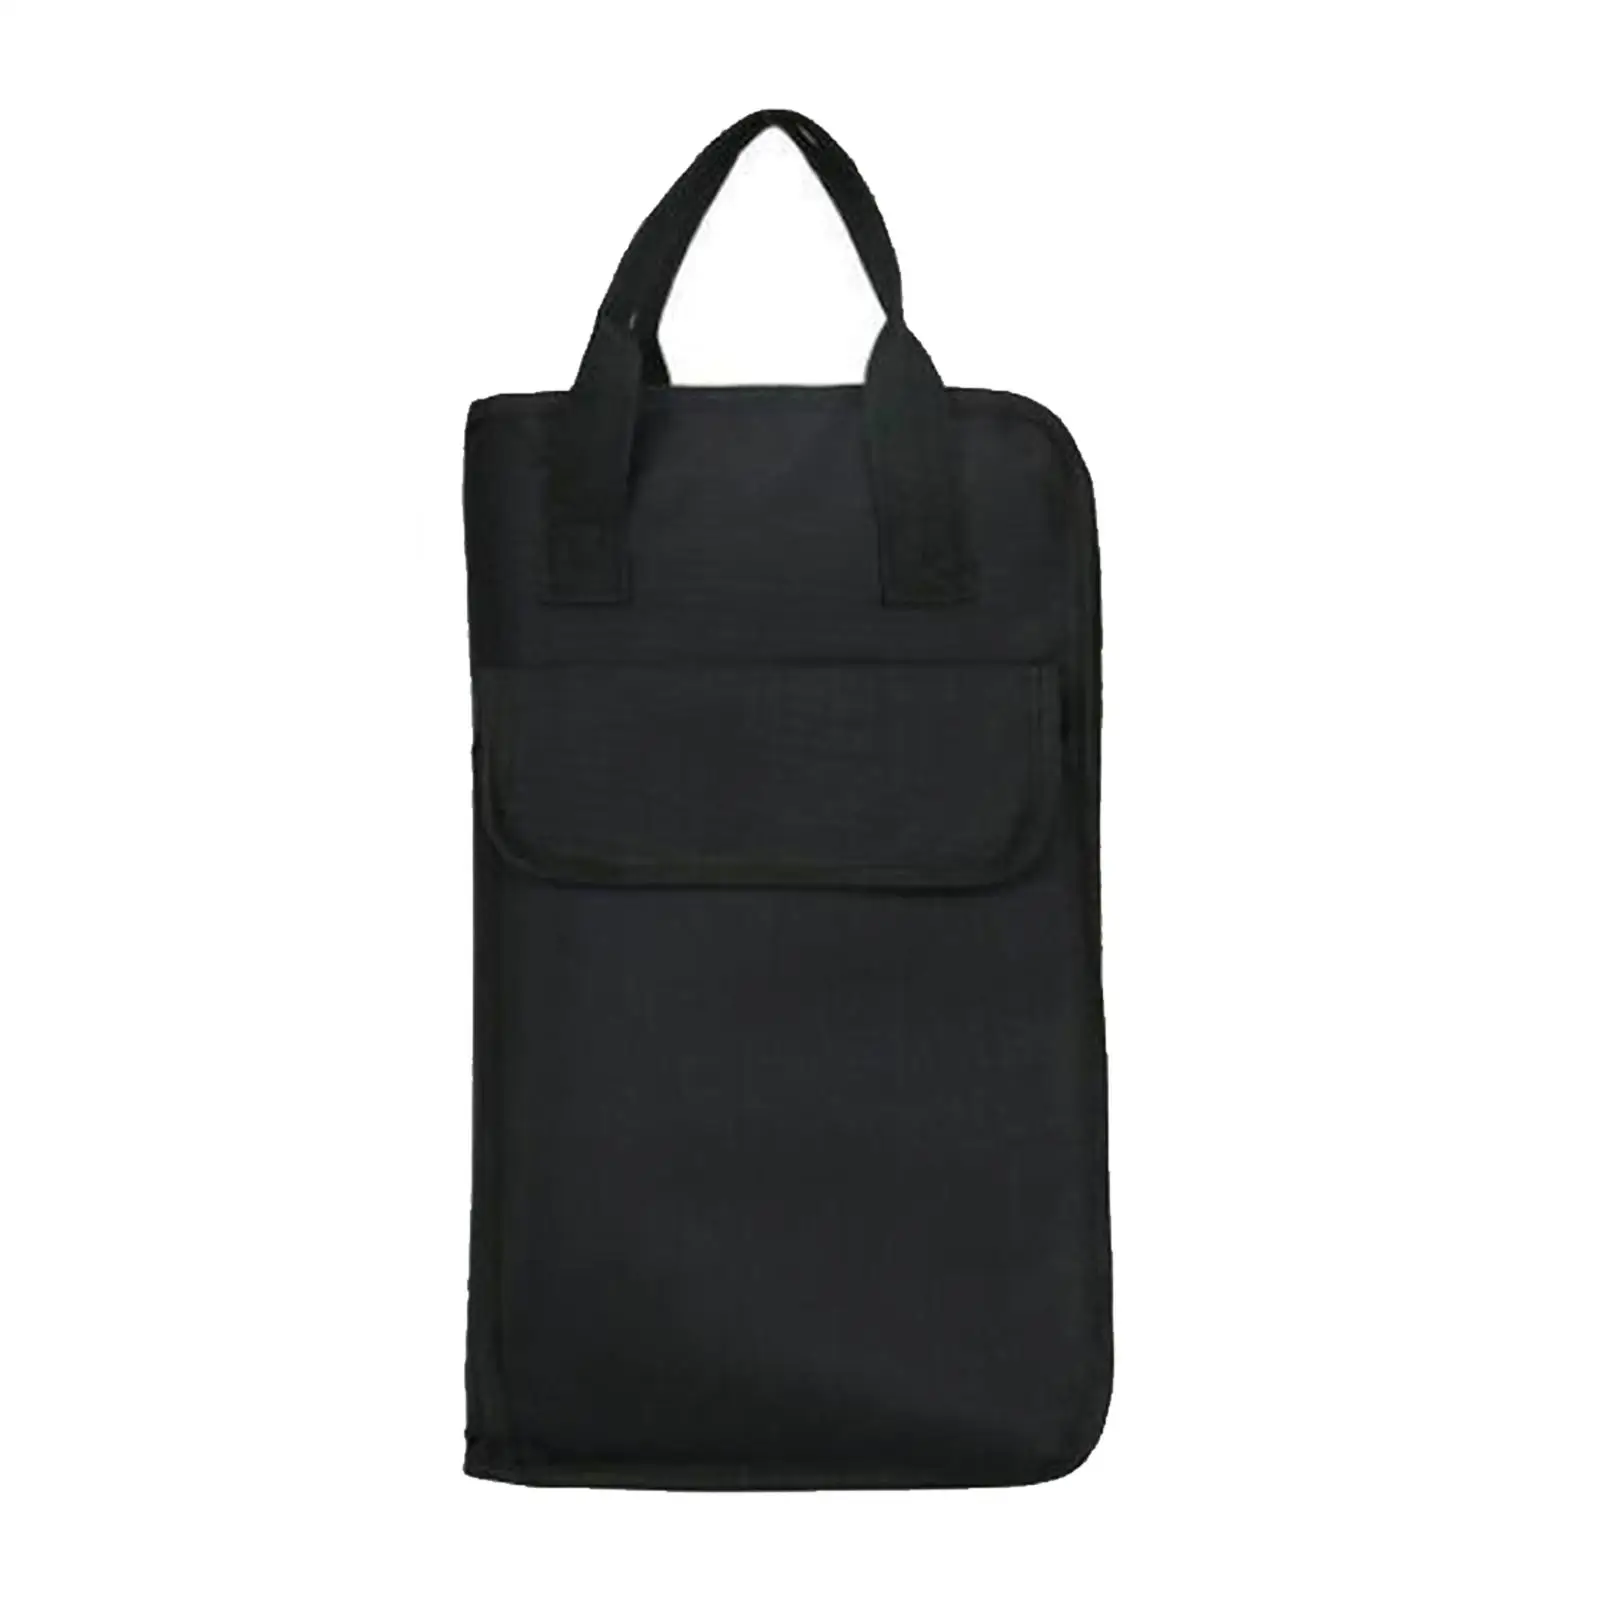 Adjustable Drumstick Bag Mallet Bag Large Capacity with Anti Falling Pockets